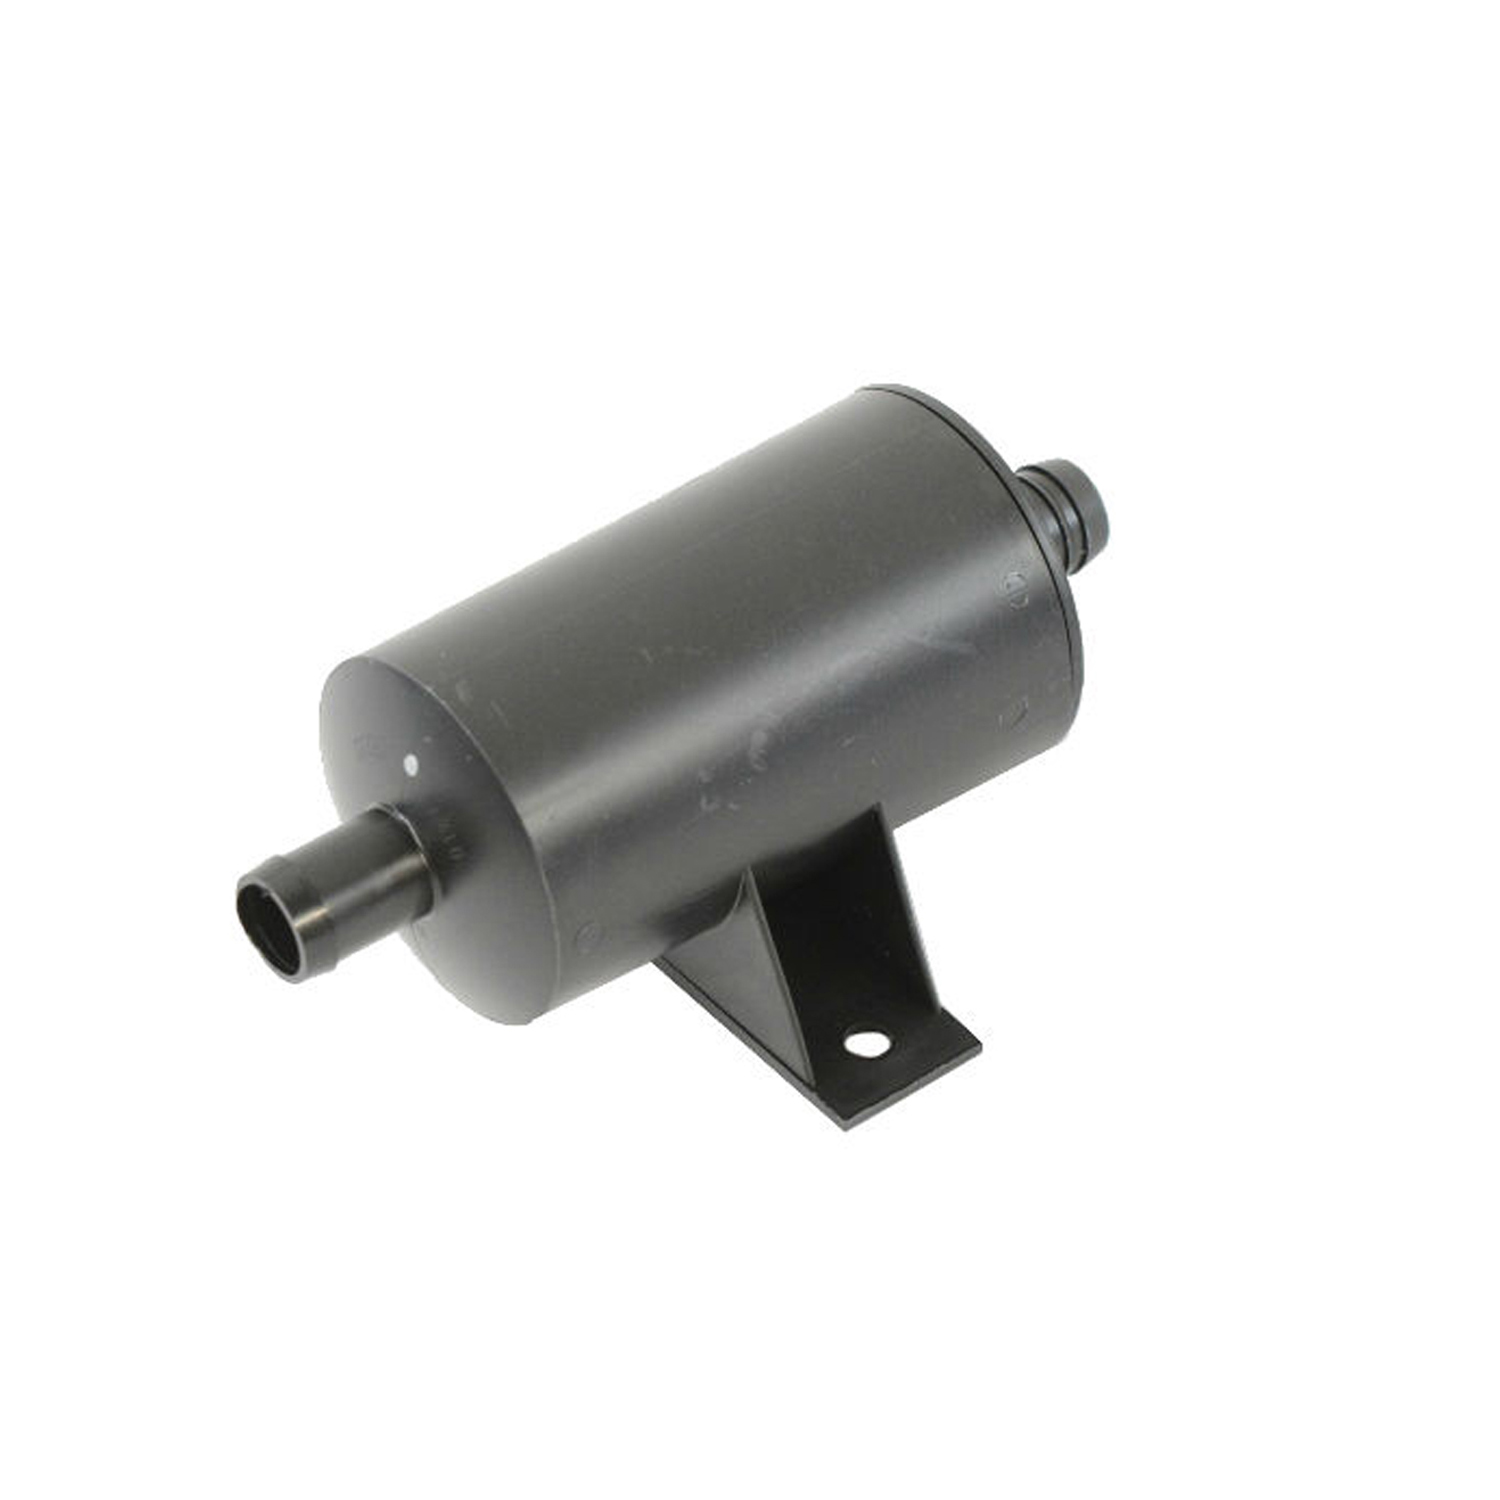 MOPAR BRAND - Fuel Vapor Leak Detection Pump Filter - MPB 04891561AA